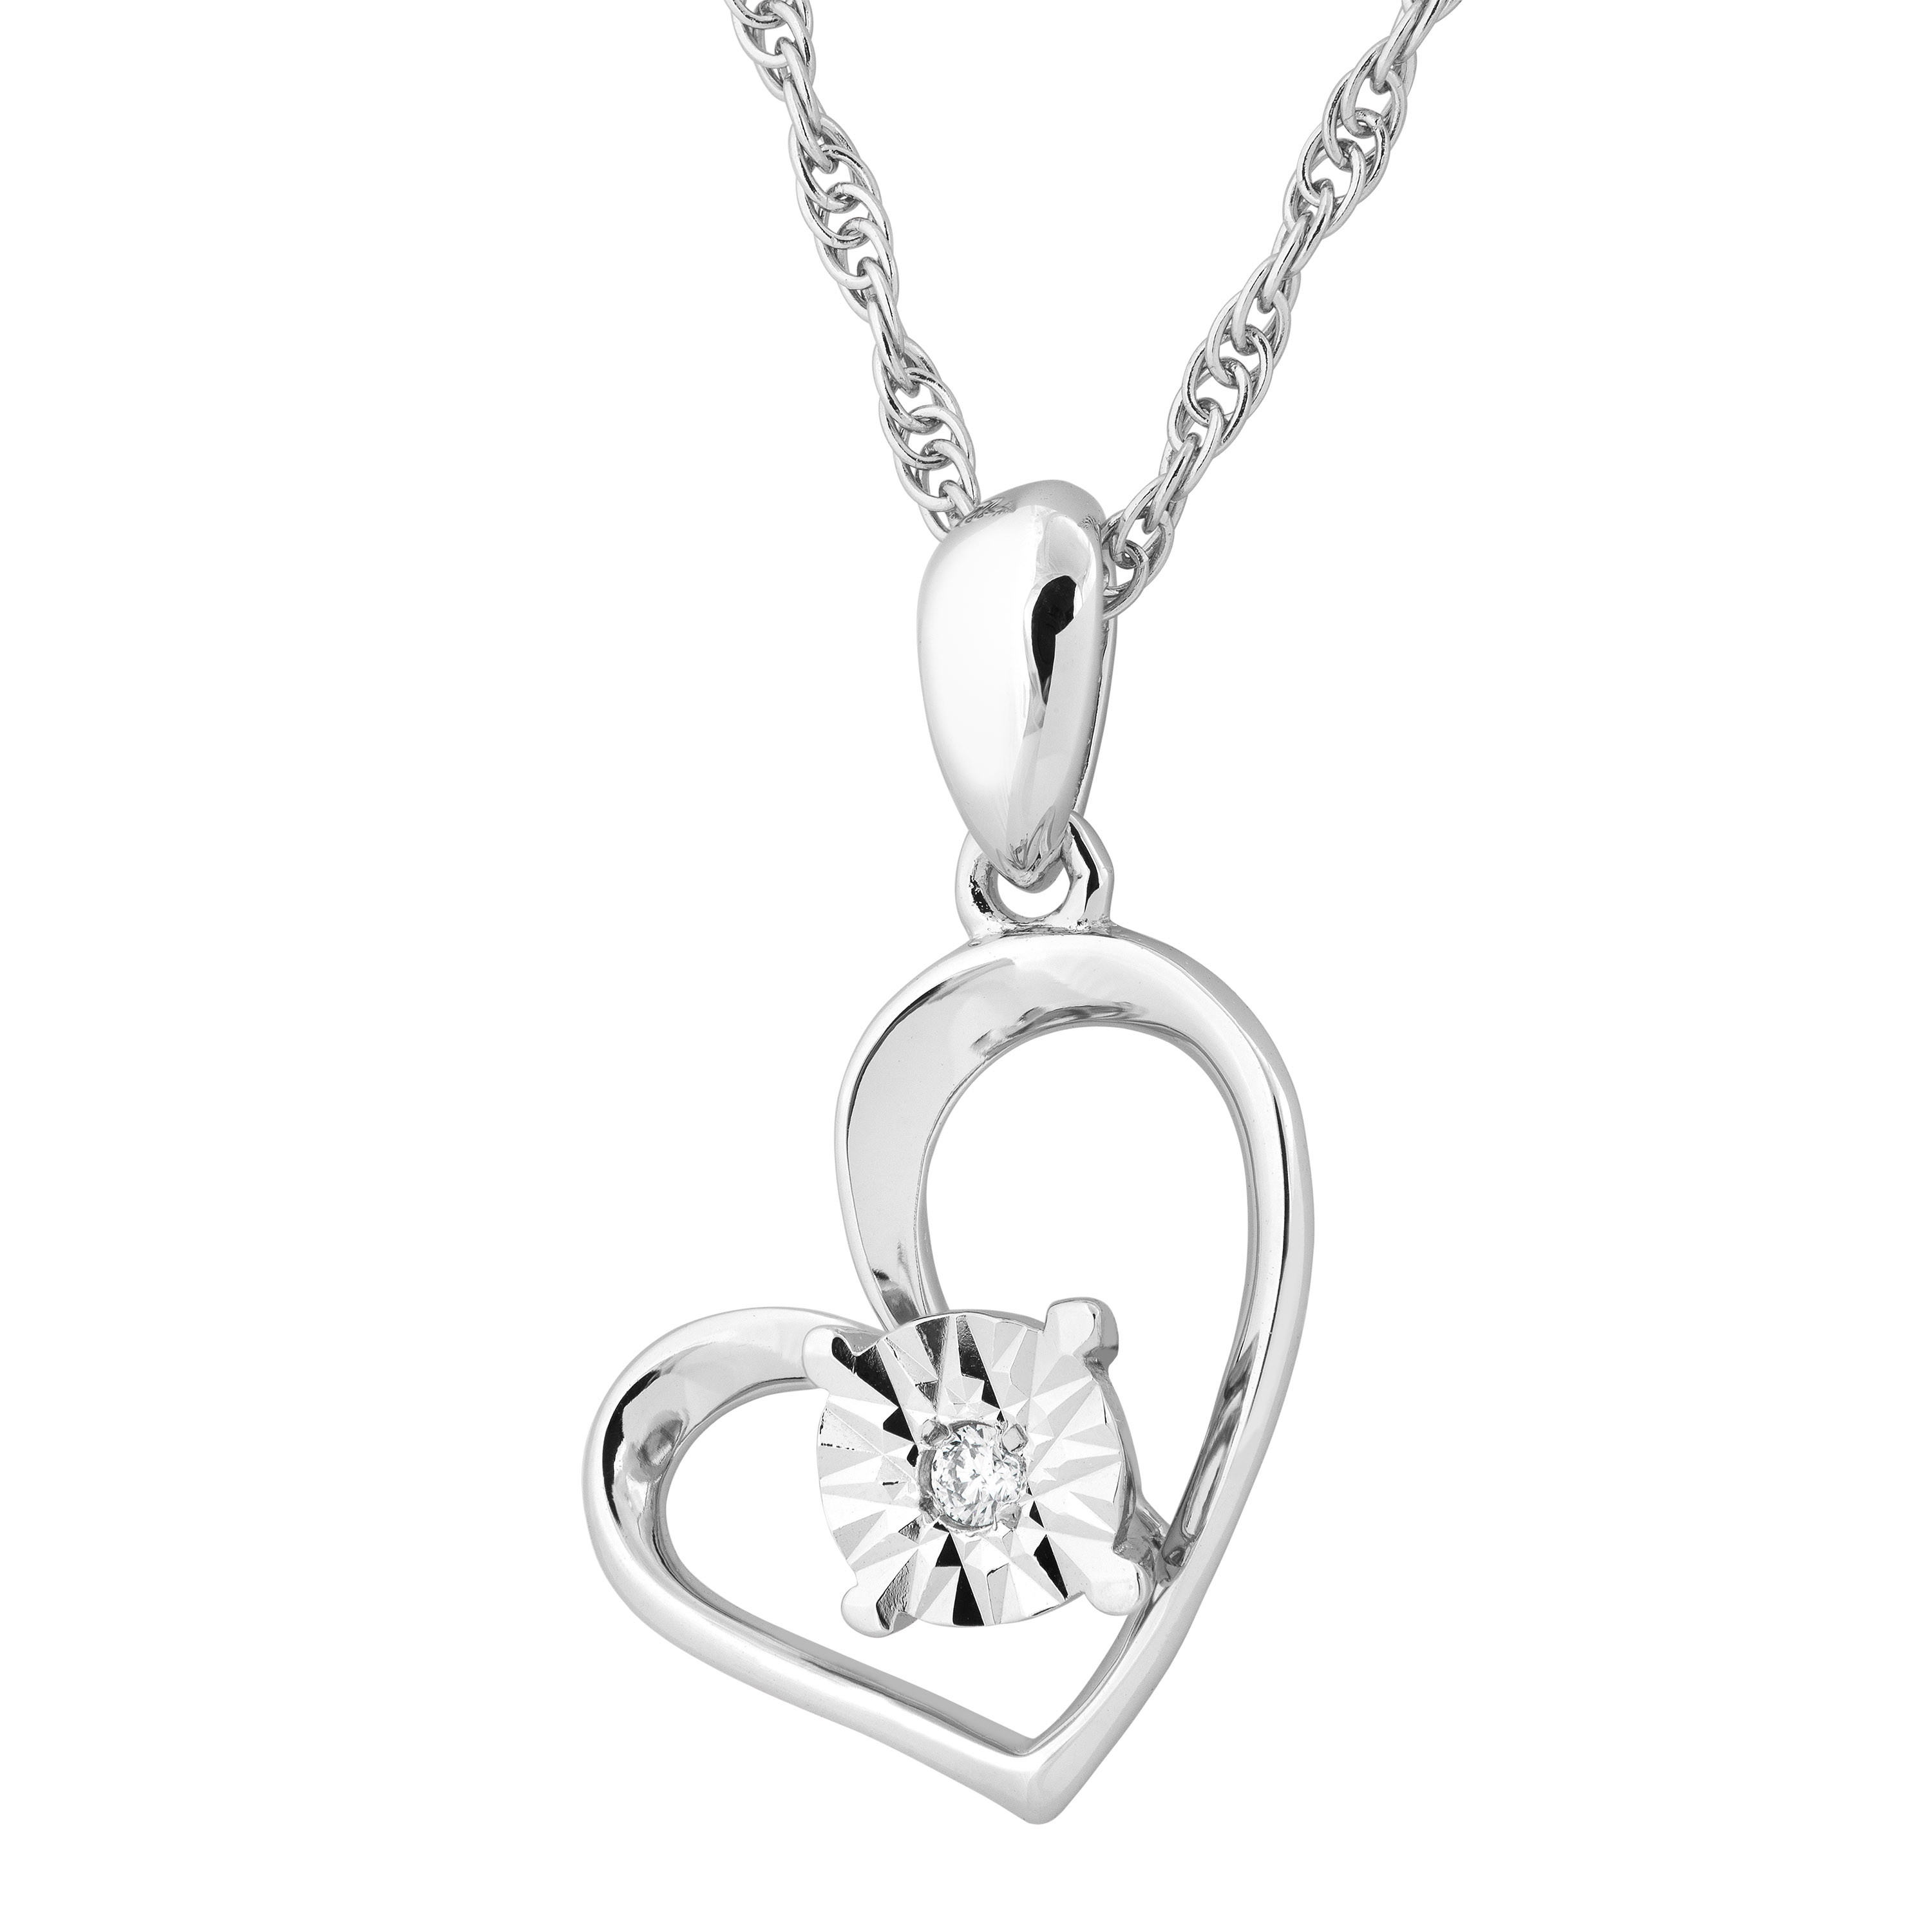 Diamond Heart Pendant Necklace, Sterling Silver. 